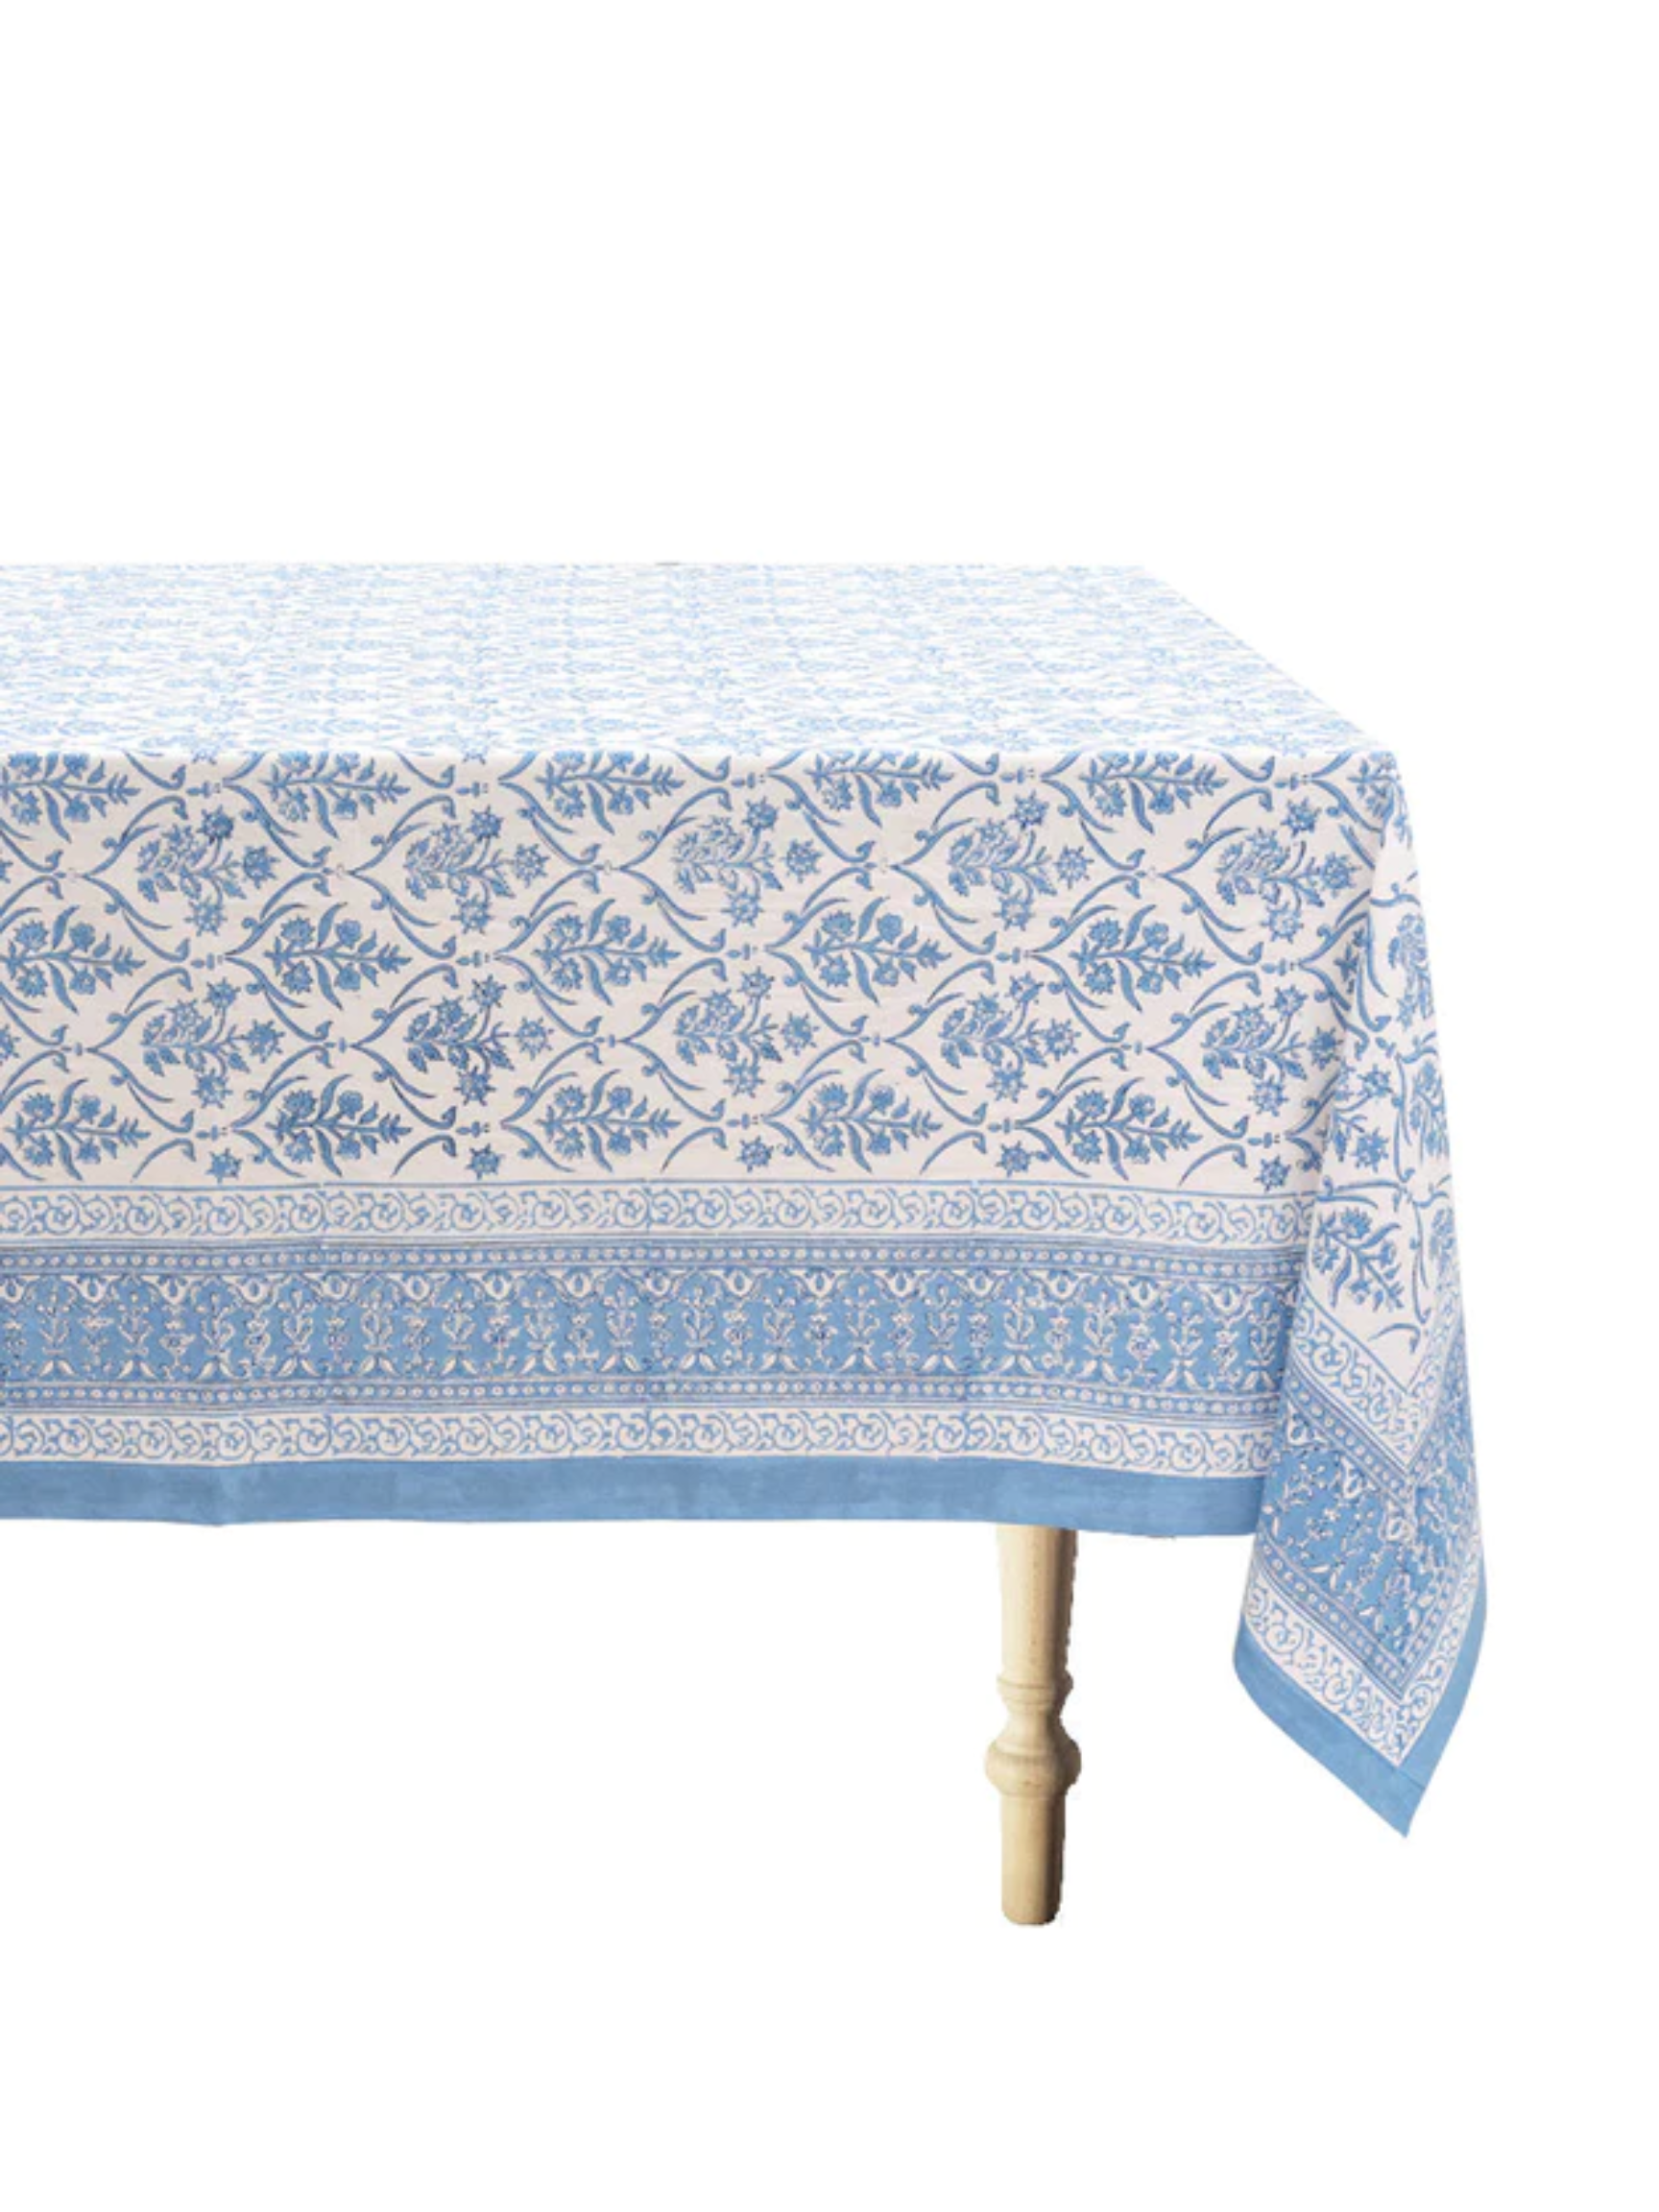 Kalamkari Tablecloth Blue and White, Rectangular